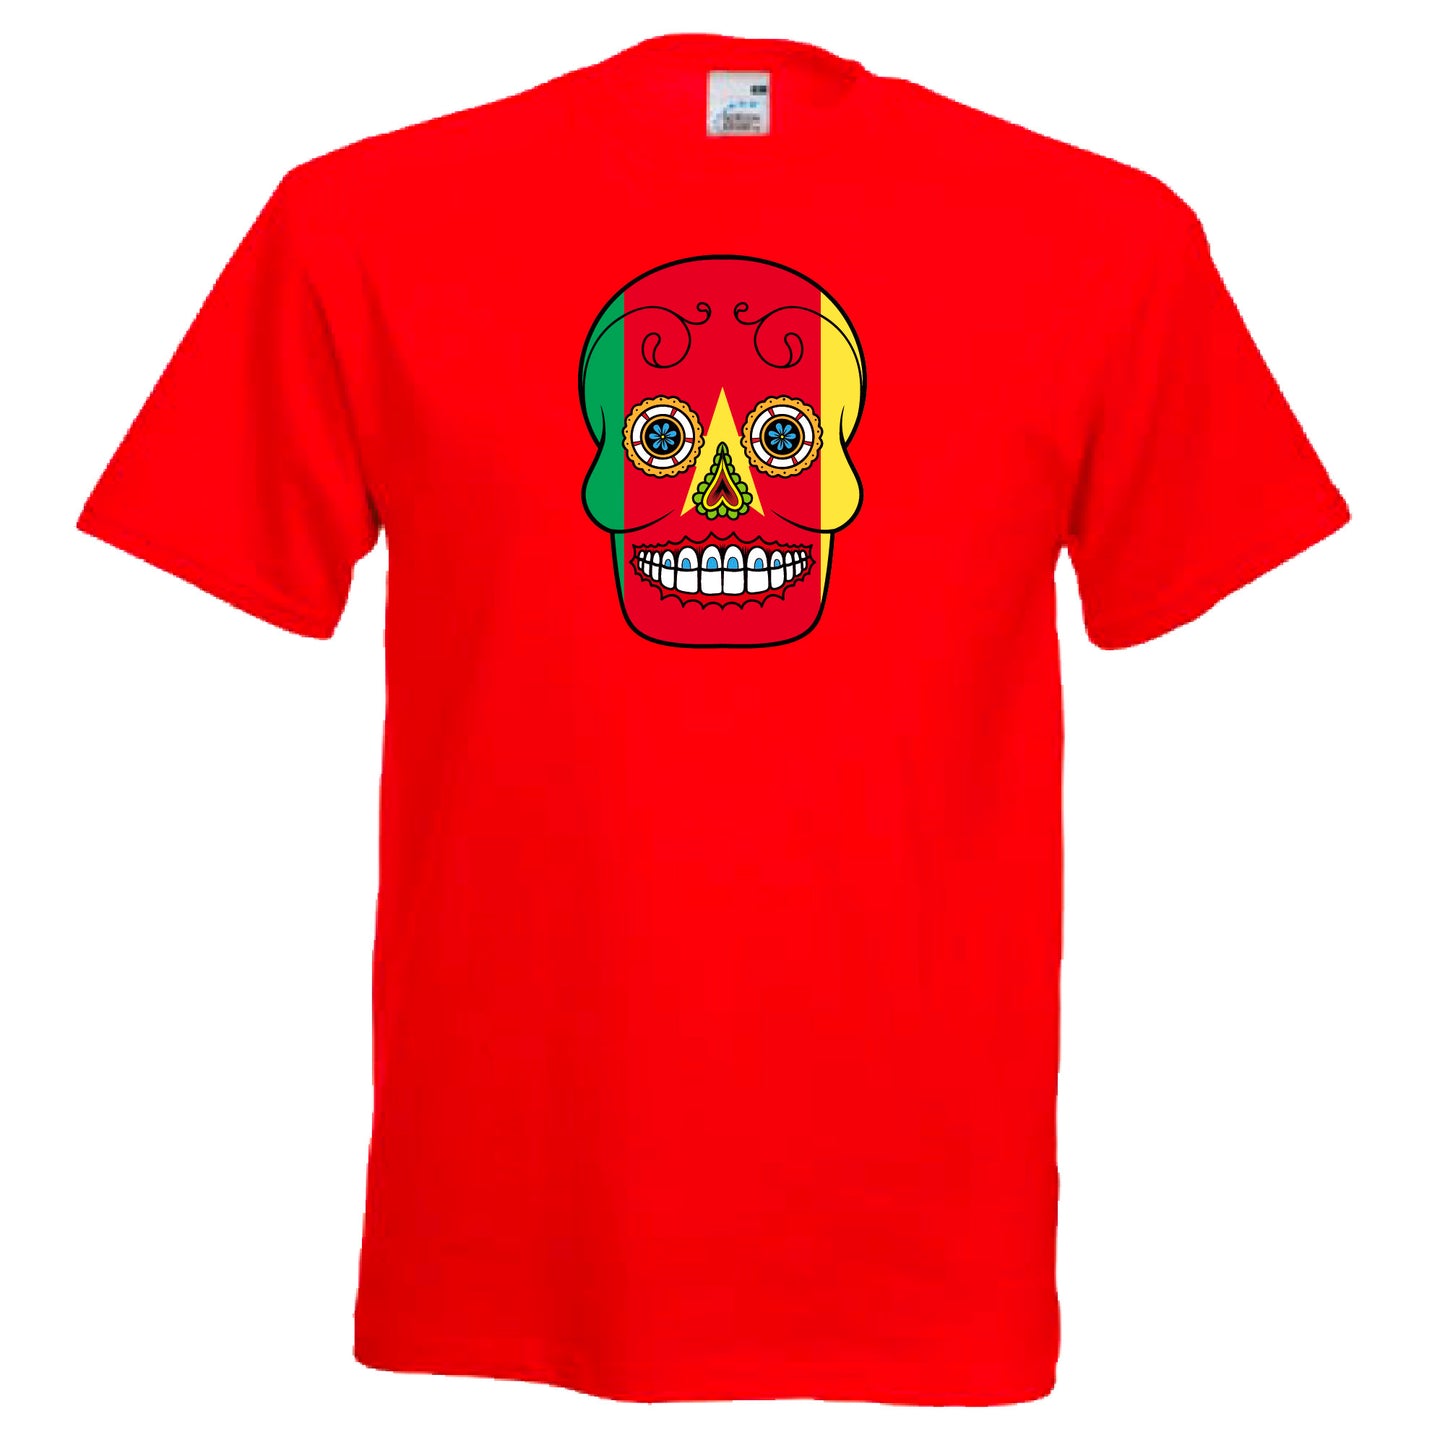 INDIGOS UG - T-Shirt Herren - Kamerun - Skull - Fussball